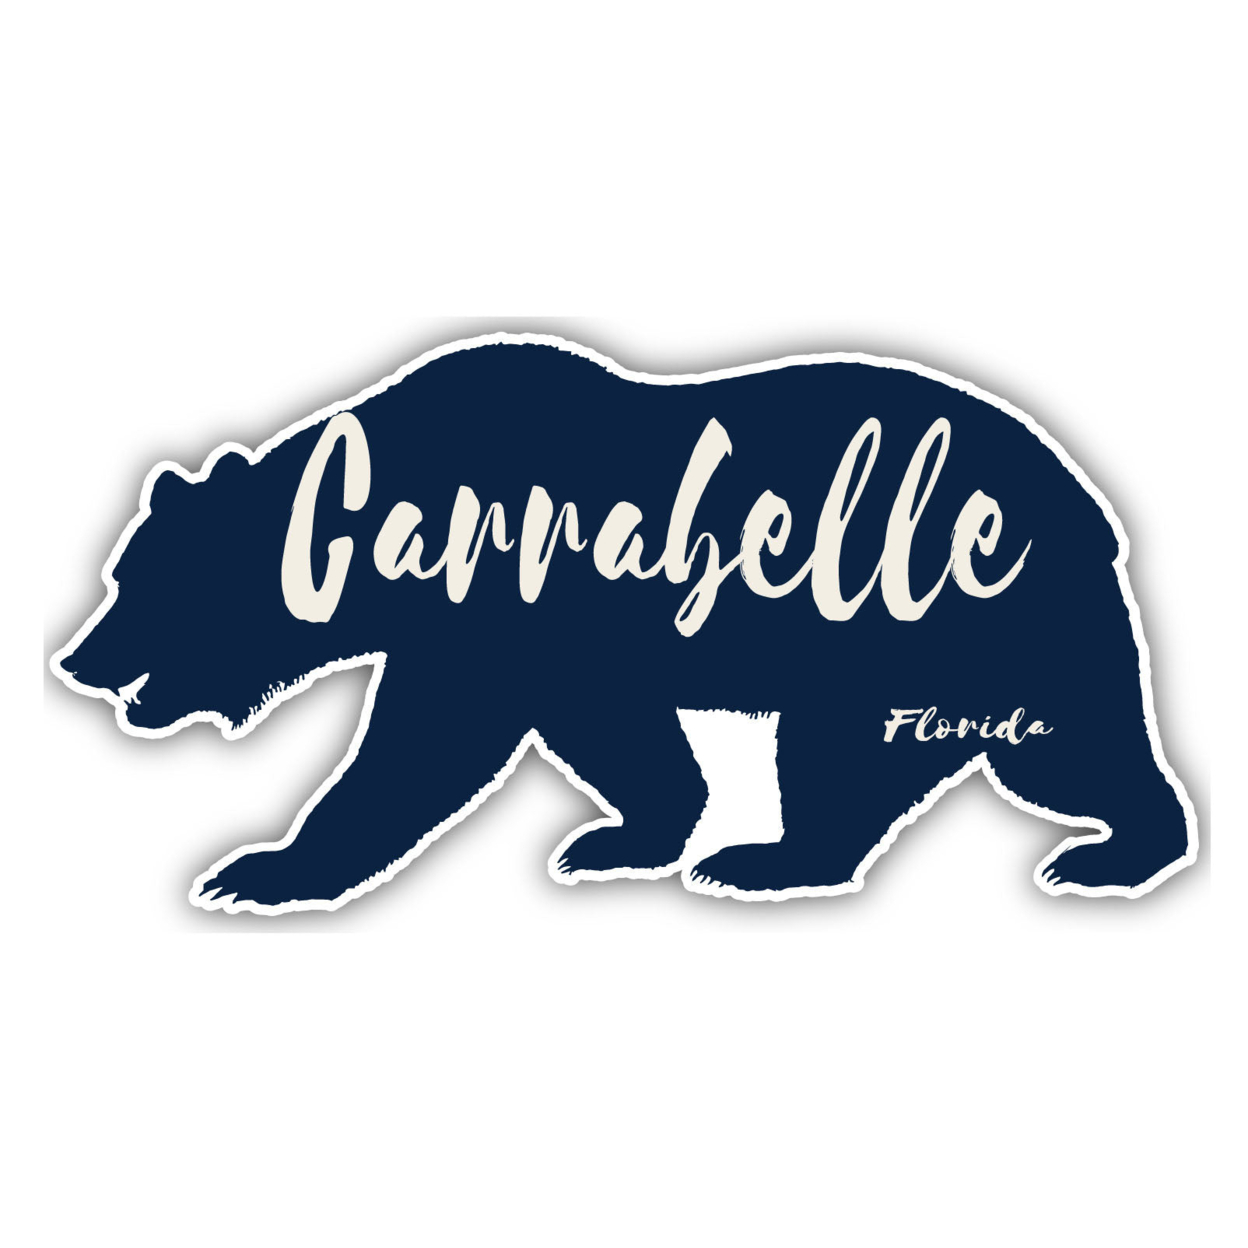 Carrabelle Florida Souvenir Decorative Stickers (Choose Theme And Size) - 4-Pack, 6-Inch, Bear